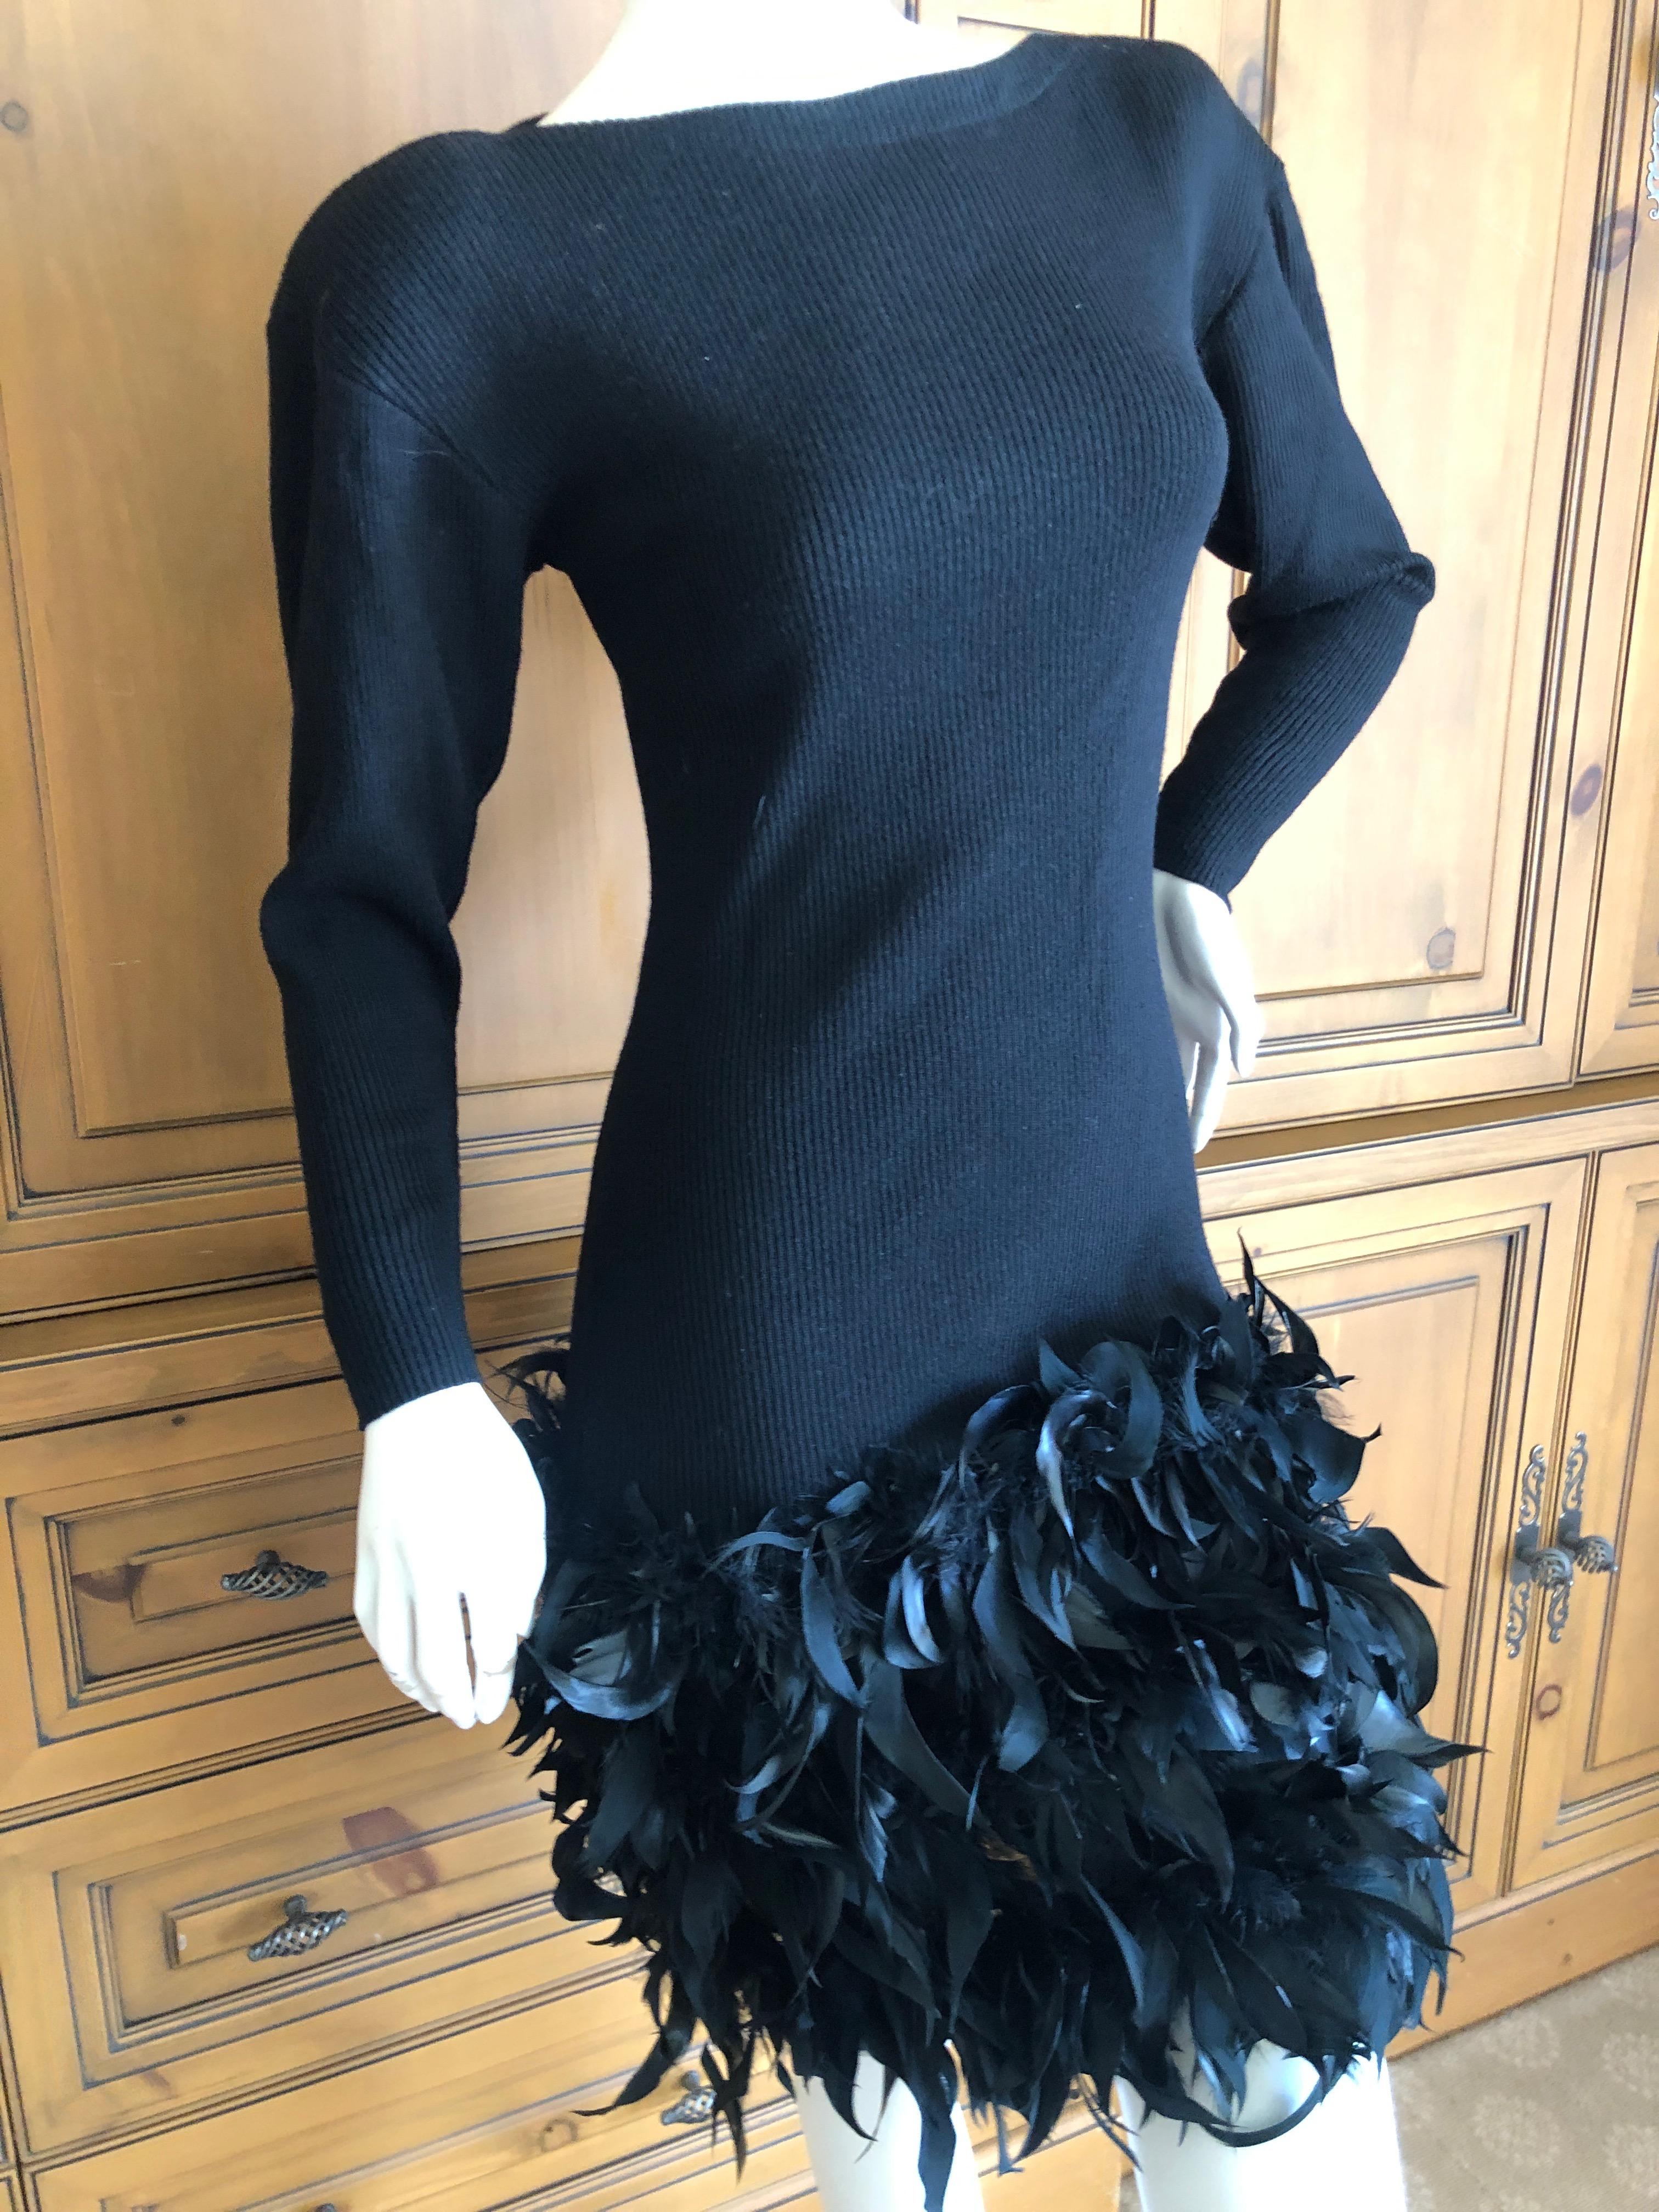 Yves Saint Laurent Rive Gauche Vintage Black Dress w Feathers by Maison Lamari In Excellent Condition For Sale In Cloverdale, CA